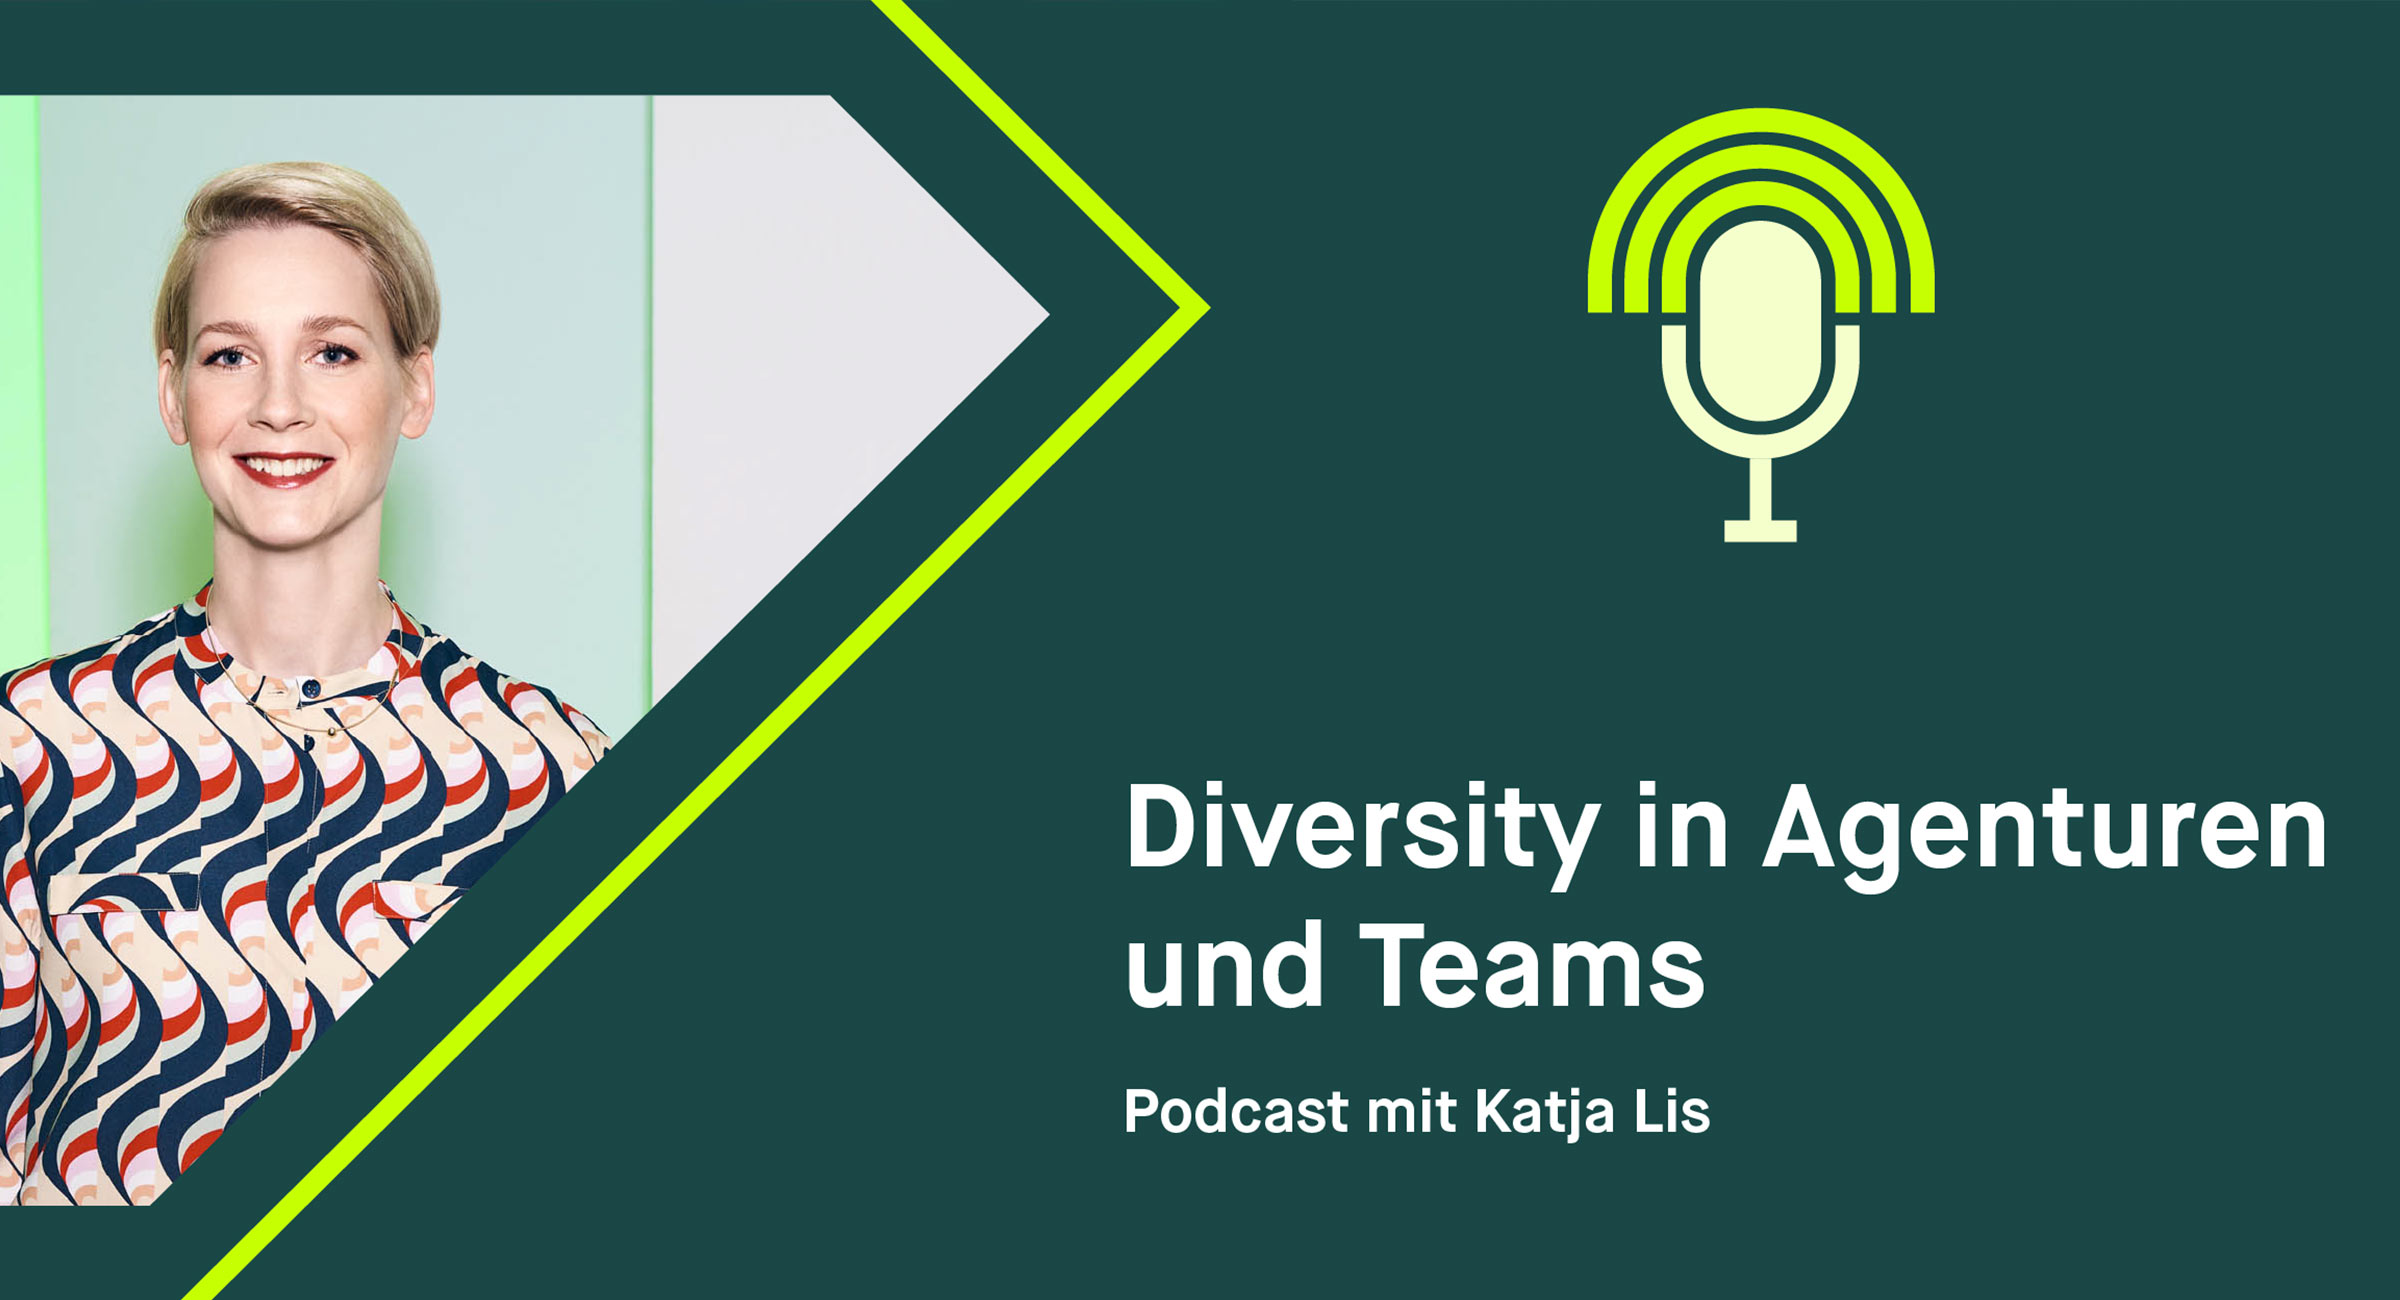 dbf designbuero frankfurt ddcast podcast diversity agenturen katja lis 1